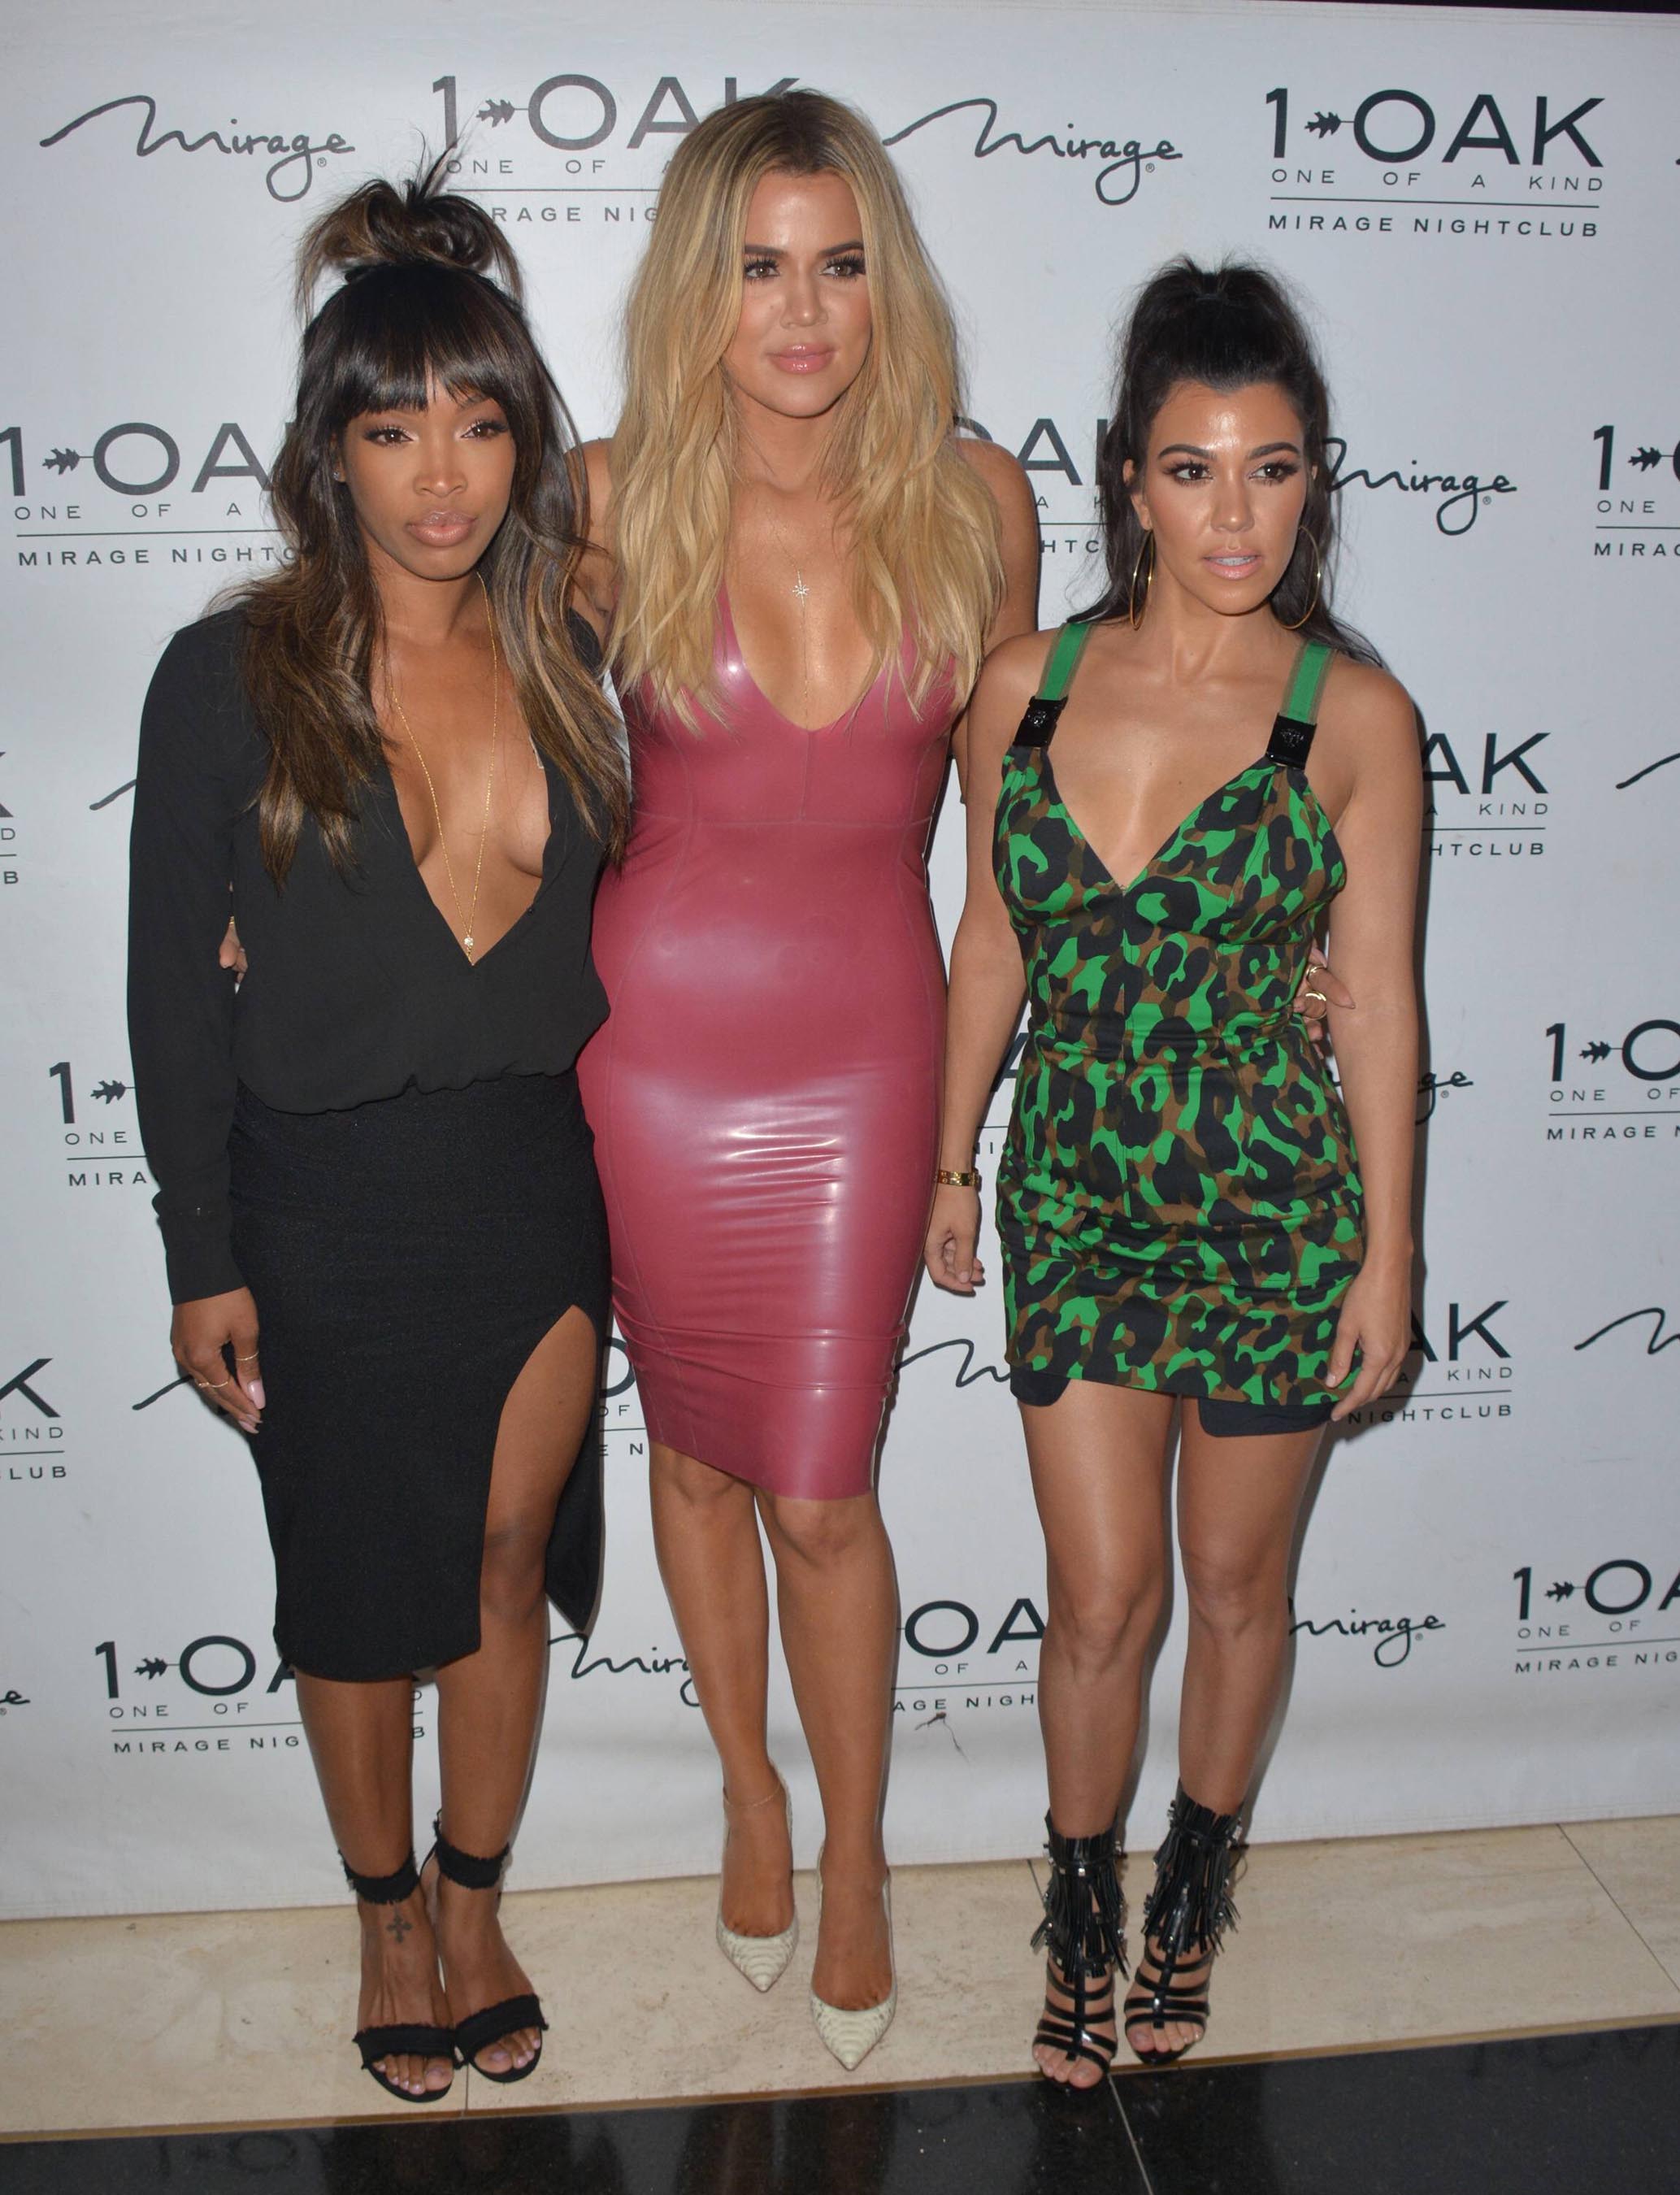 Khloe Kardashian attends Oak Nightclub Inside The Mirage Announces Special Birthday Celebration